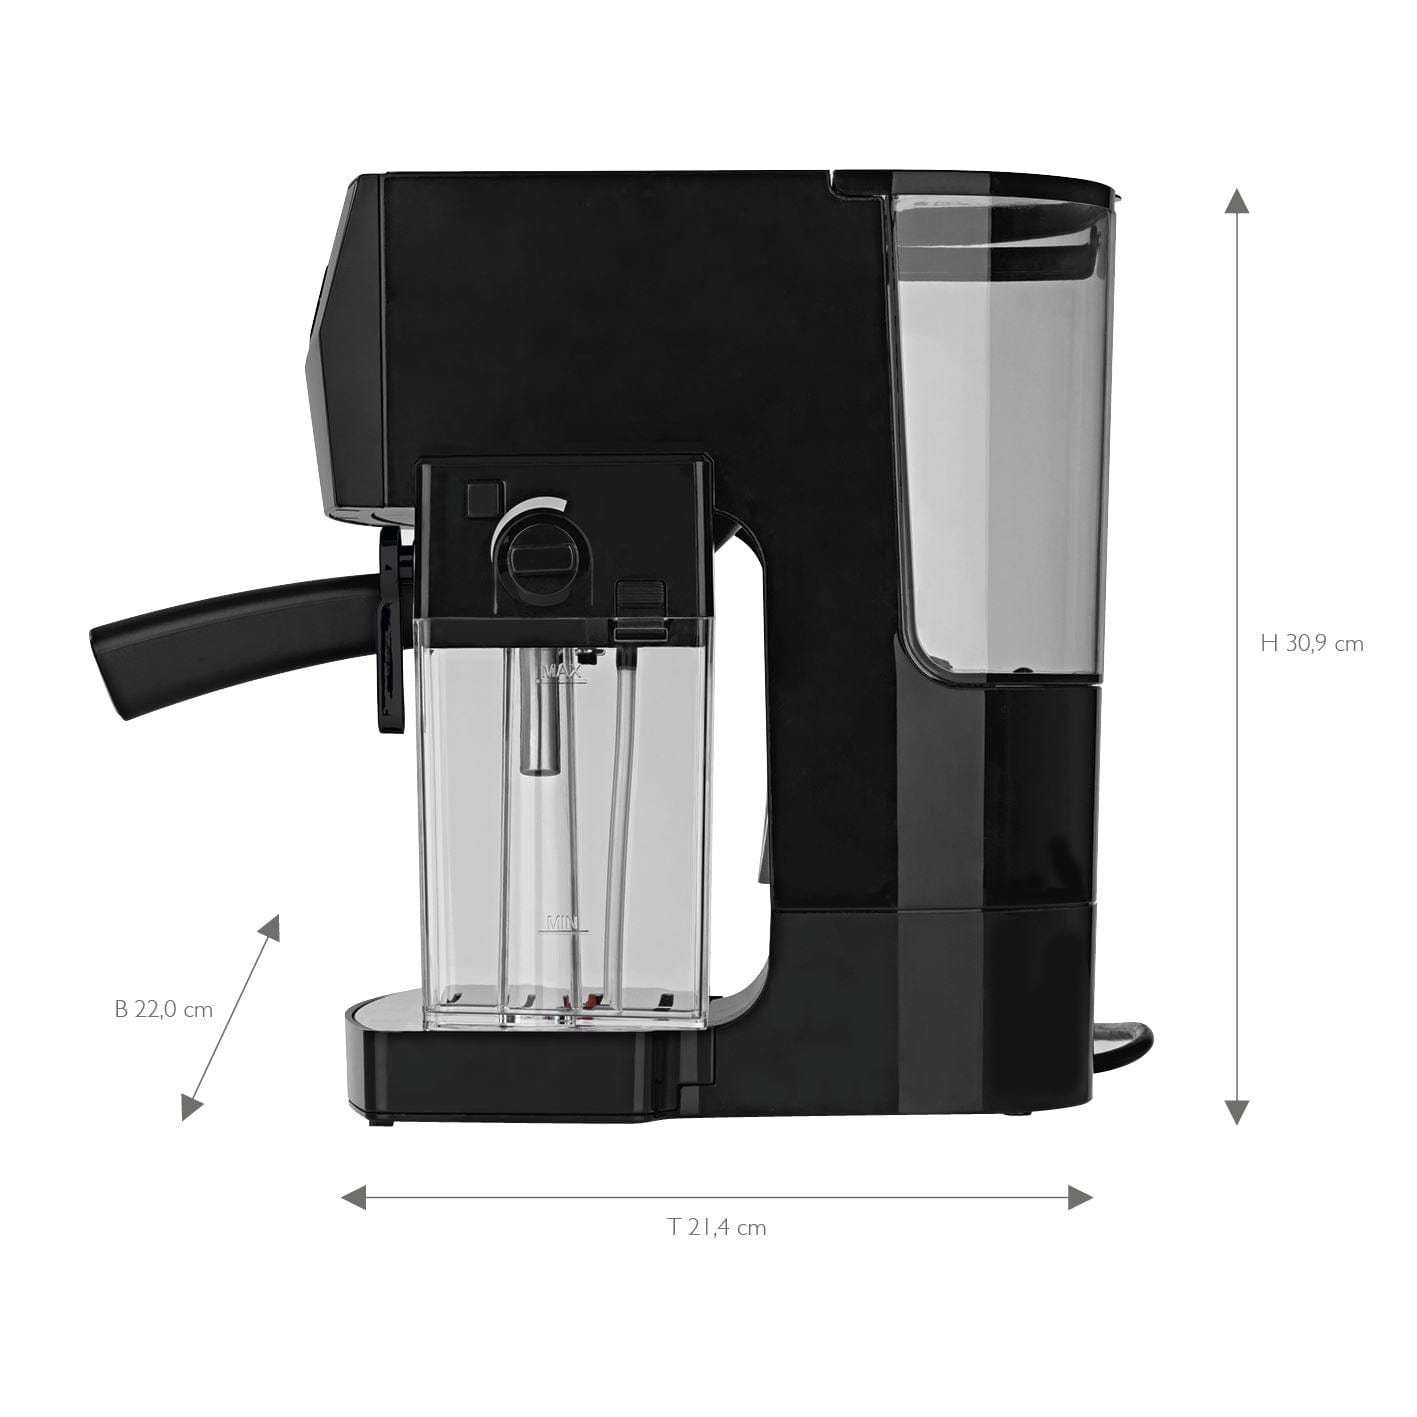 ESPRESSO-CLASSICO Espresso Portafilter Machine - 20 bar